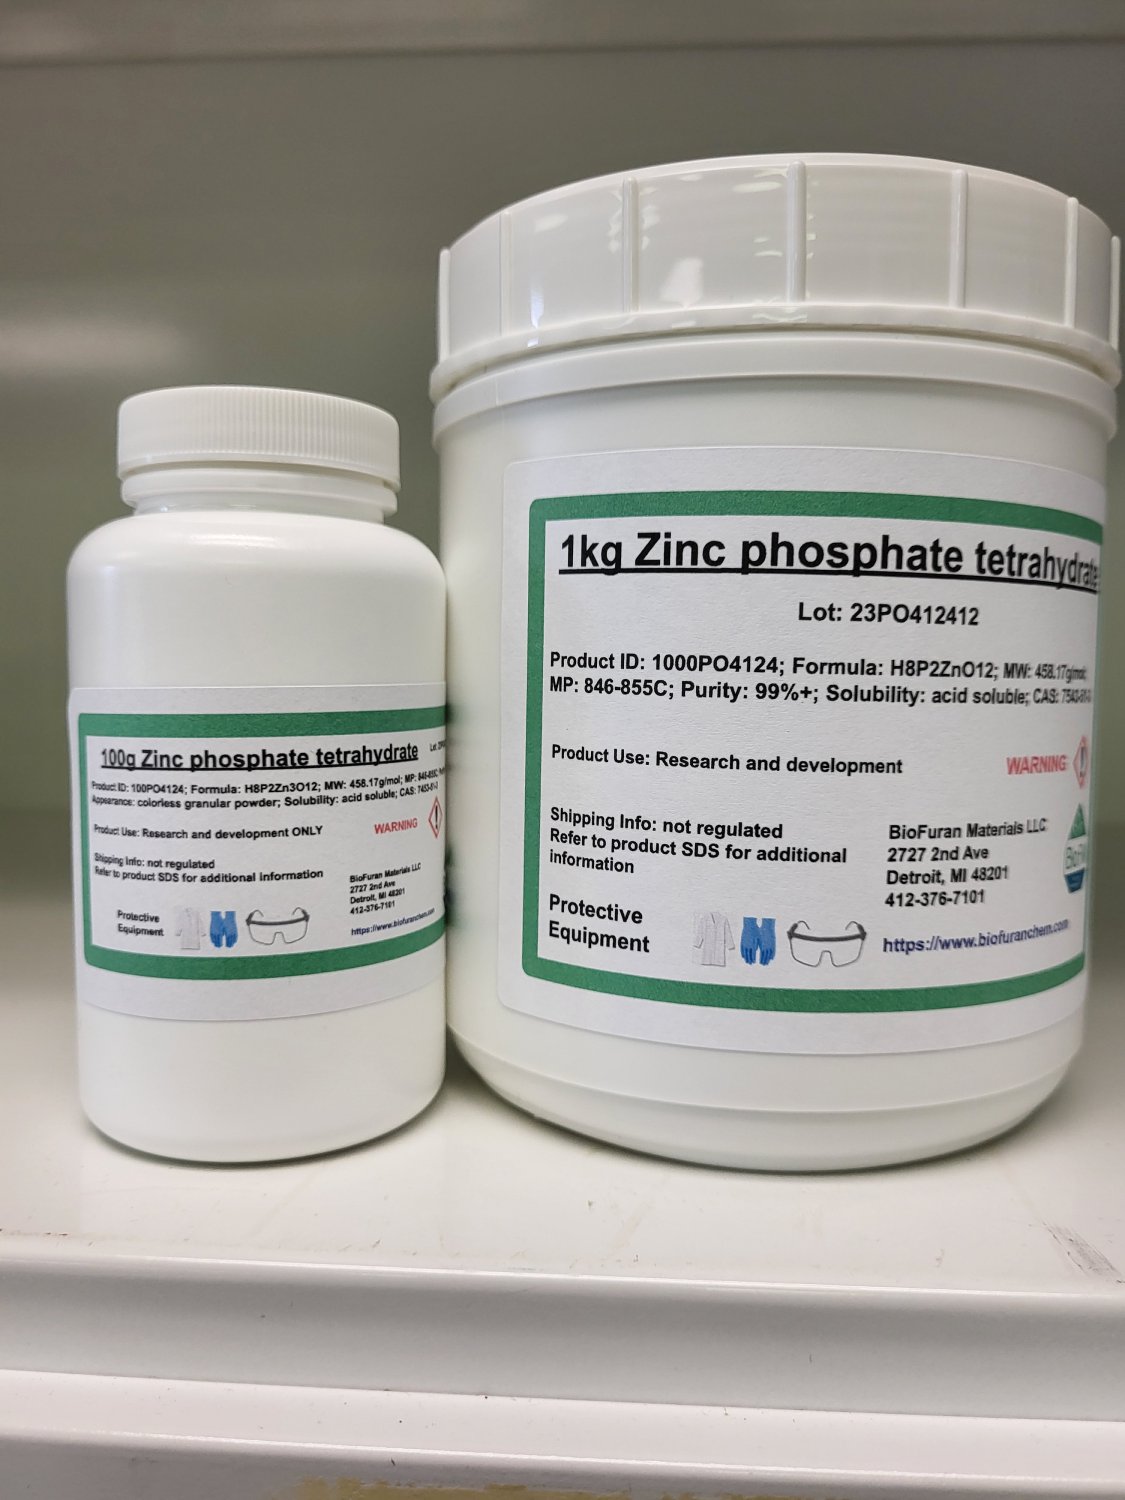 100g Zinc phosphate tetrahydrate